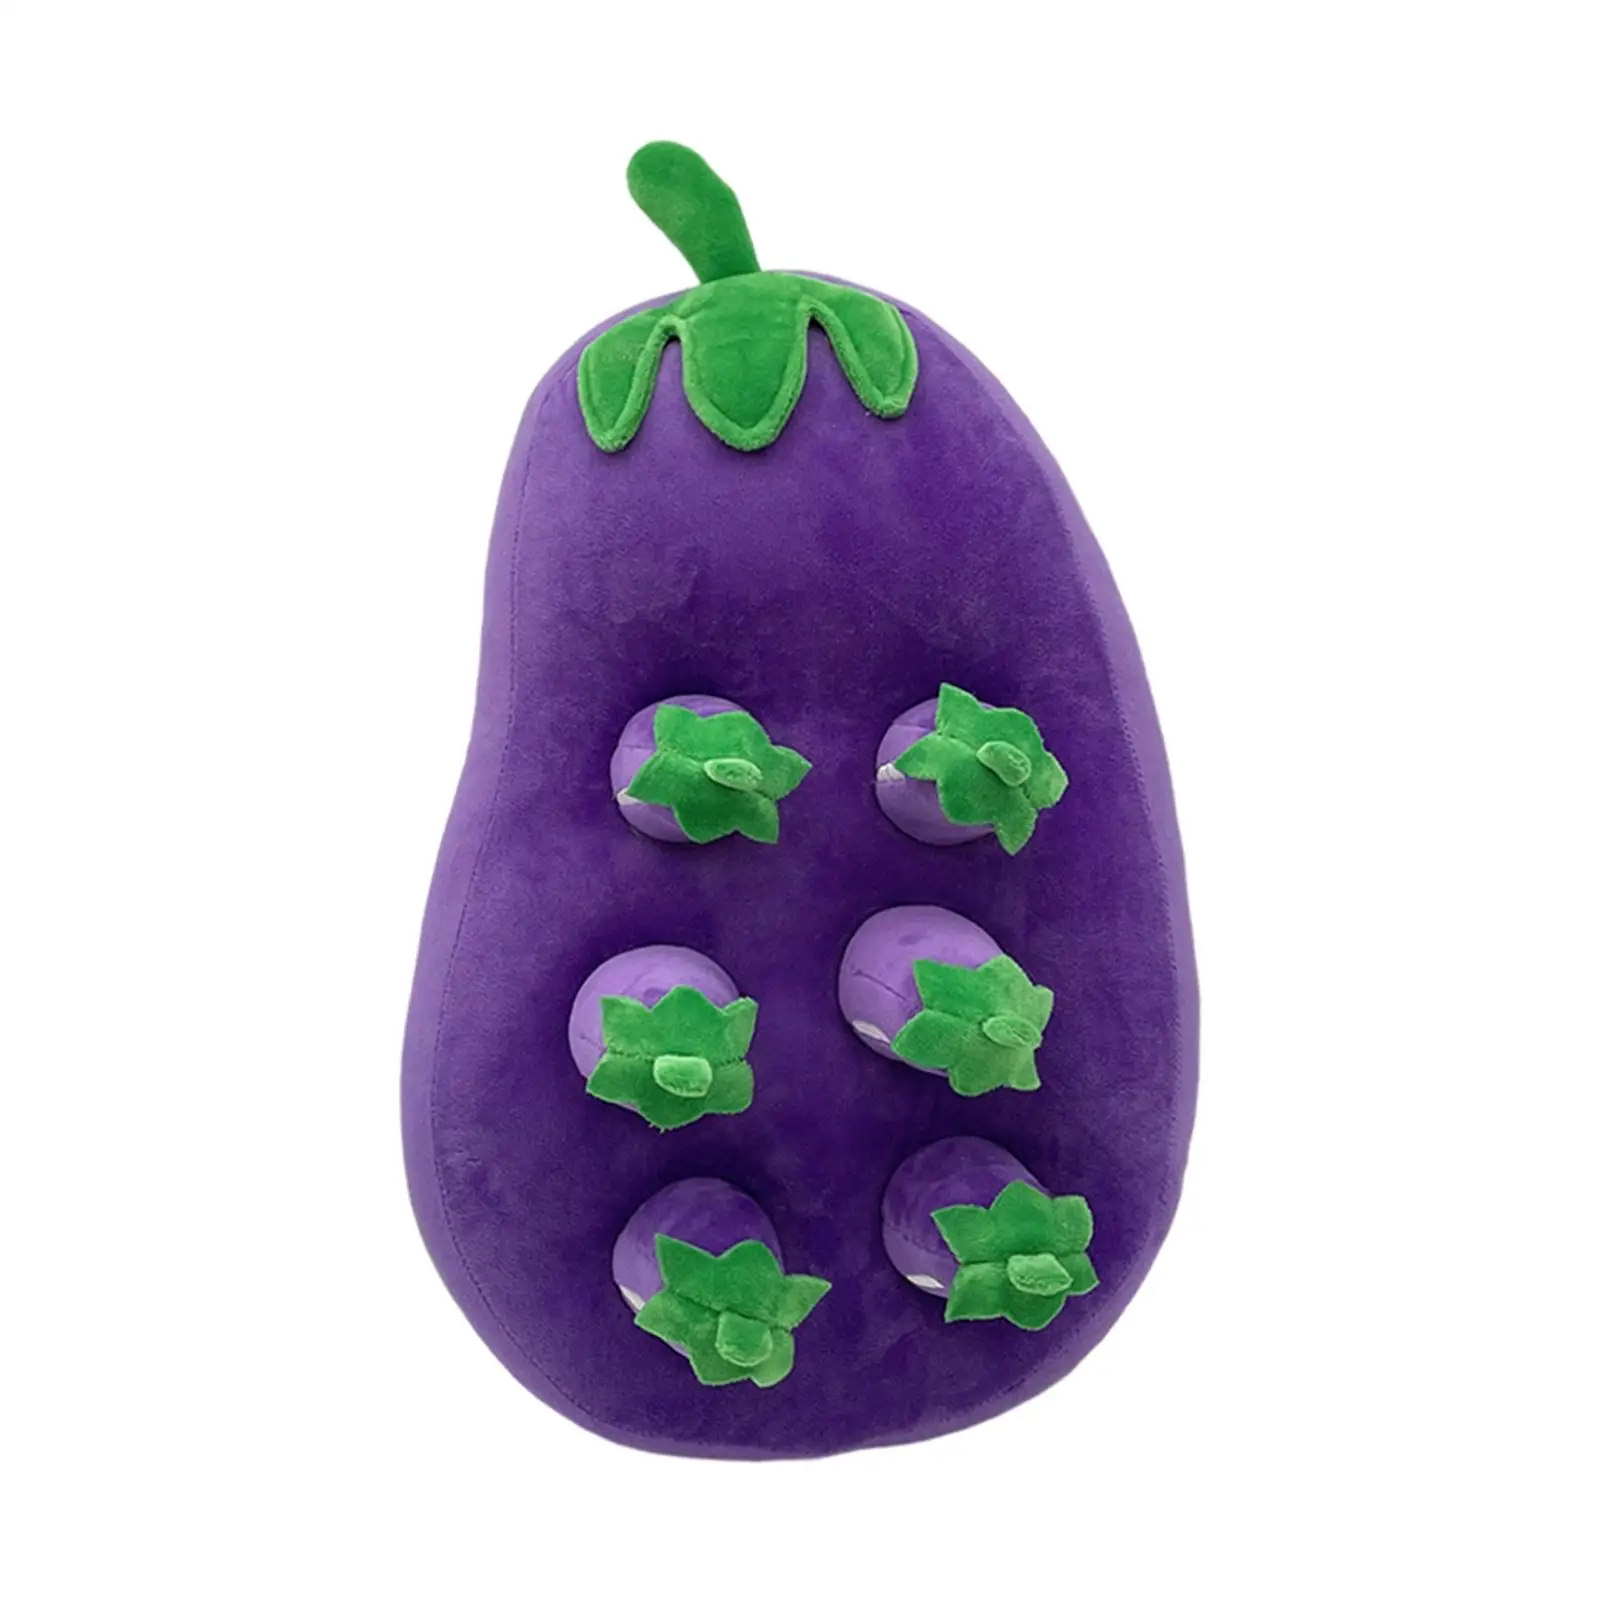 Turtle Eggplant Plushtoy Molars Toy Parent Child Interaction Education Stuffed Toy Vegetable Fruit Plush Toy for Baby Dog Pet